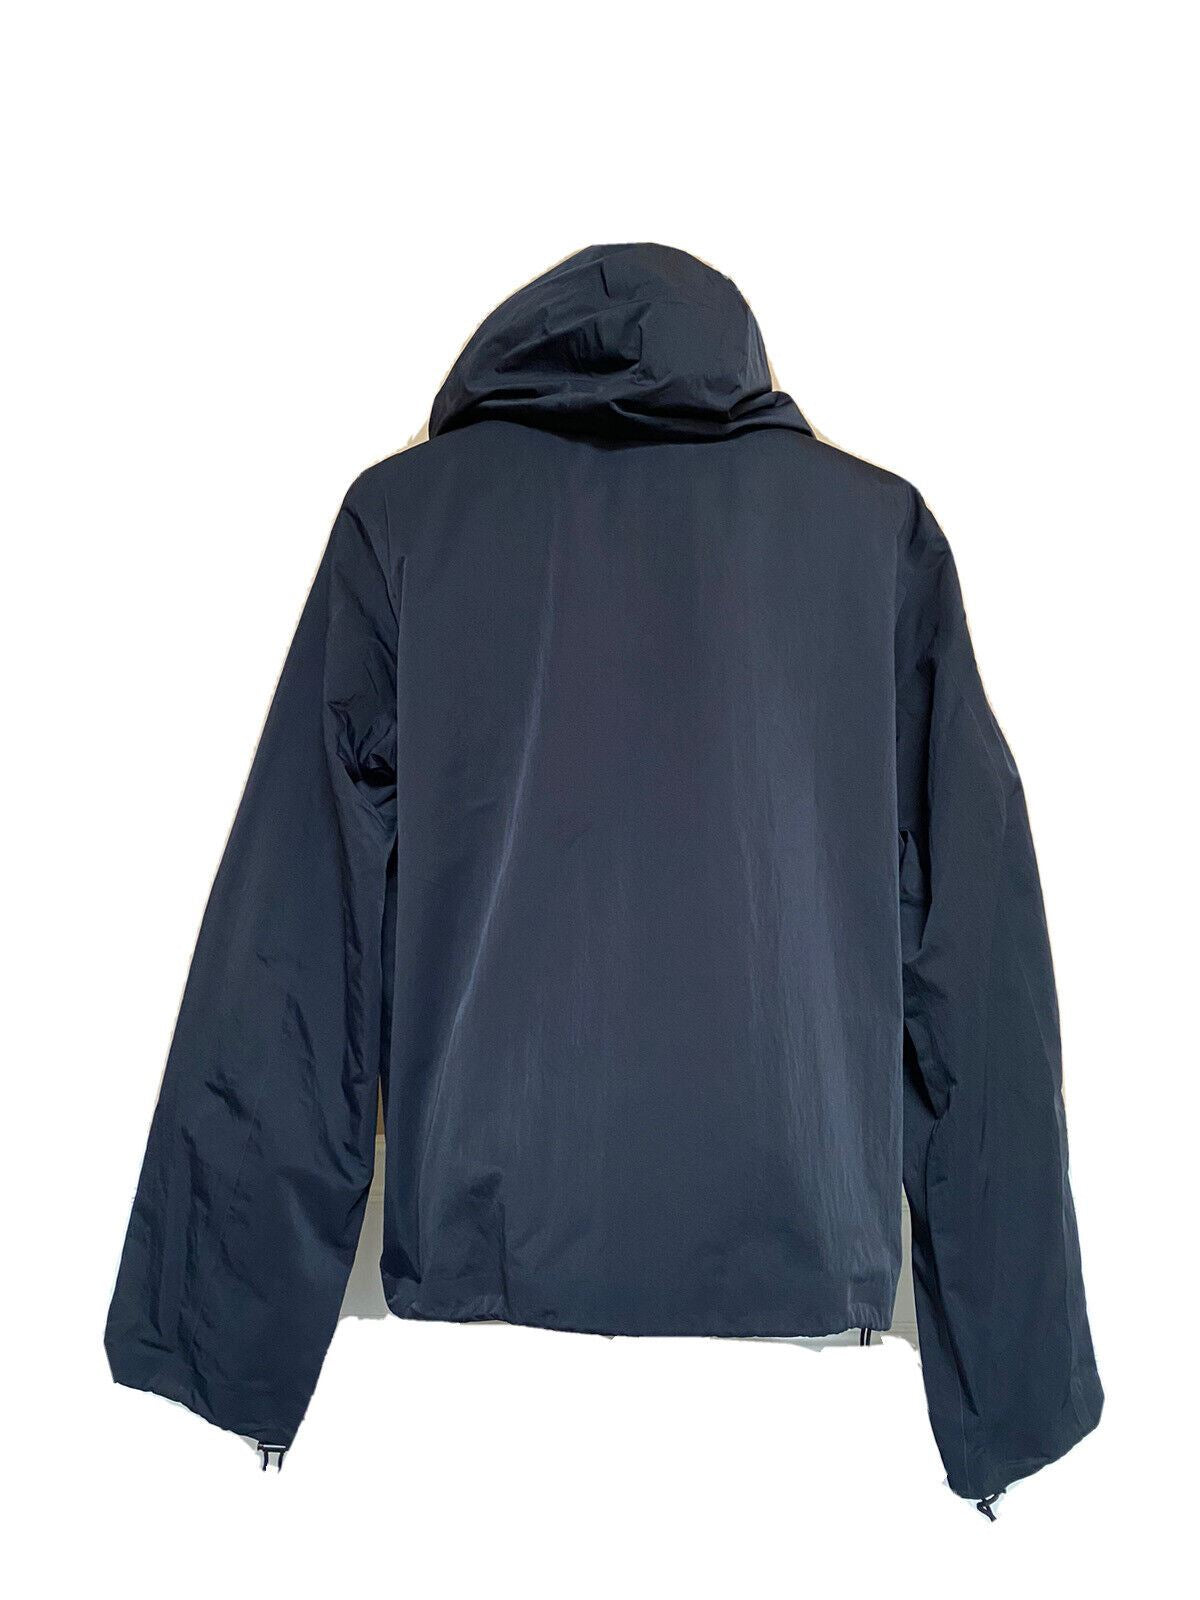 NWT $1850 Bottega Veneta Men's Blouson Tech Nylon Black Jacket with Hoodie 40 US